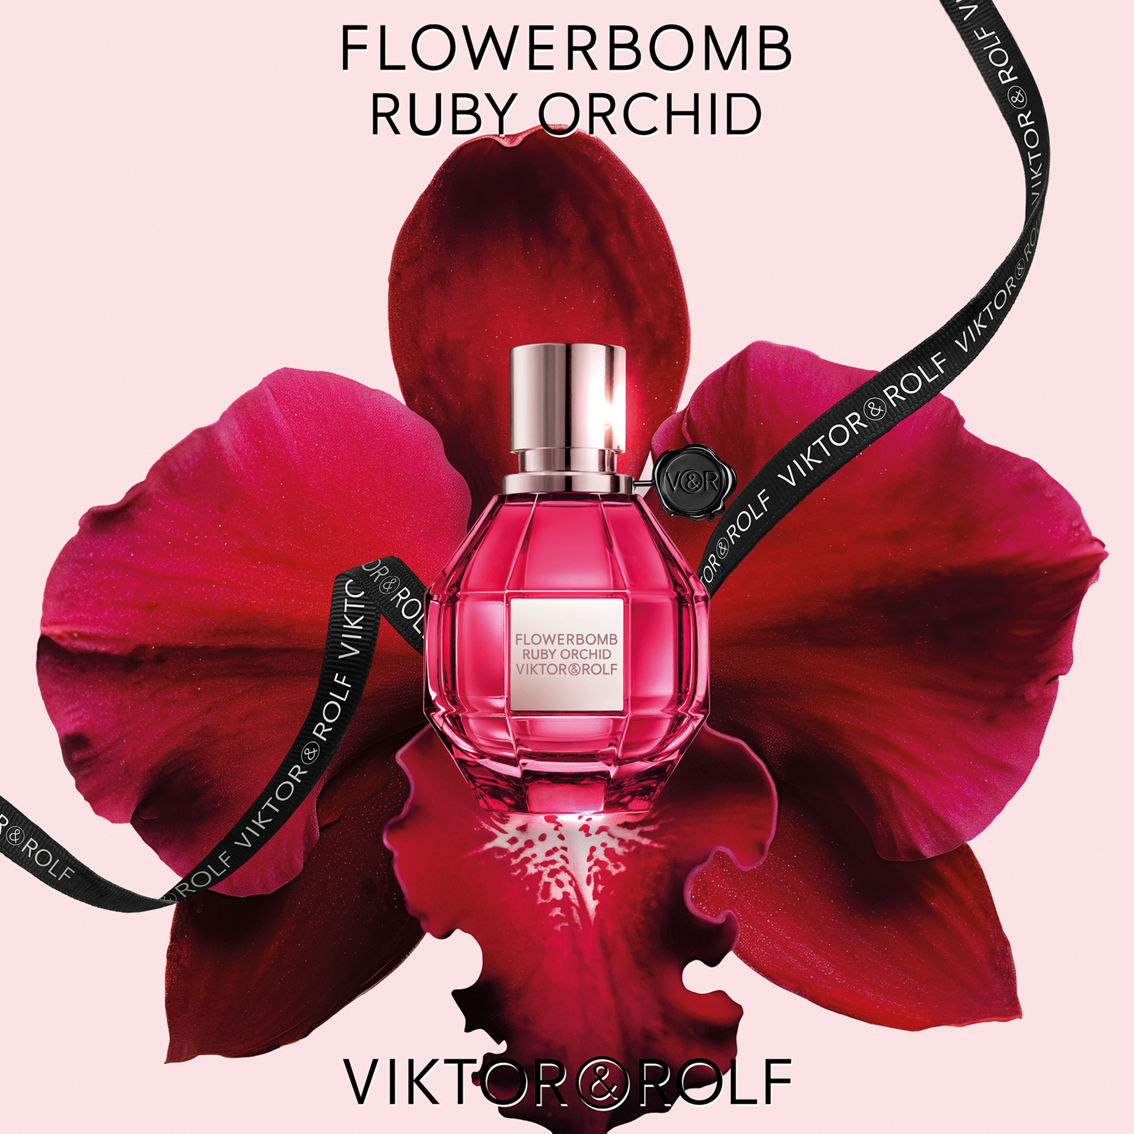 Viktor & Rolf Flowerbomb Ruby Orchid Eau de Parfum Spray - Image 4 of 5